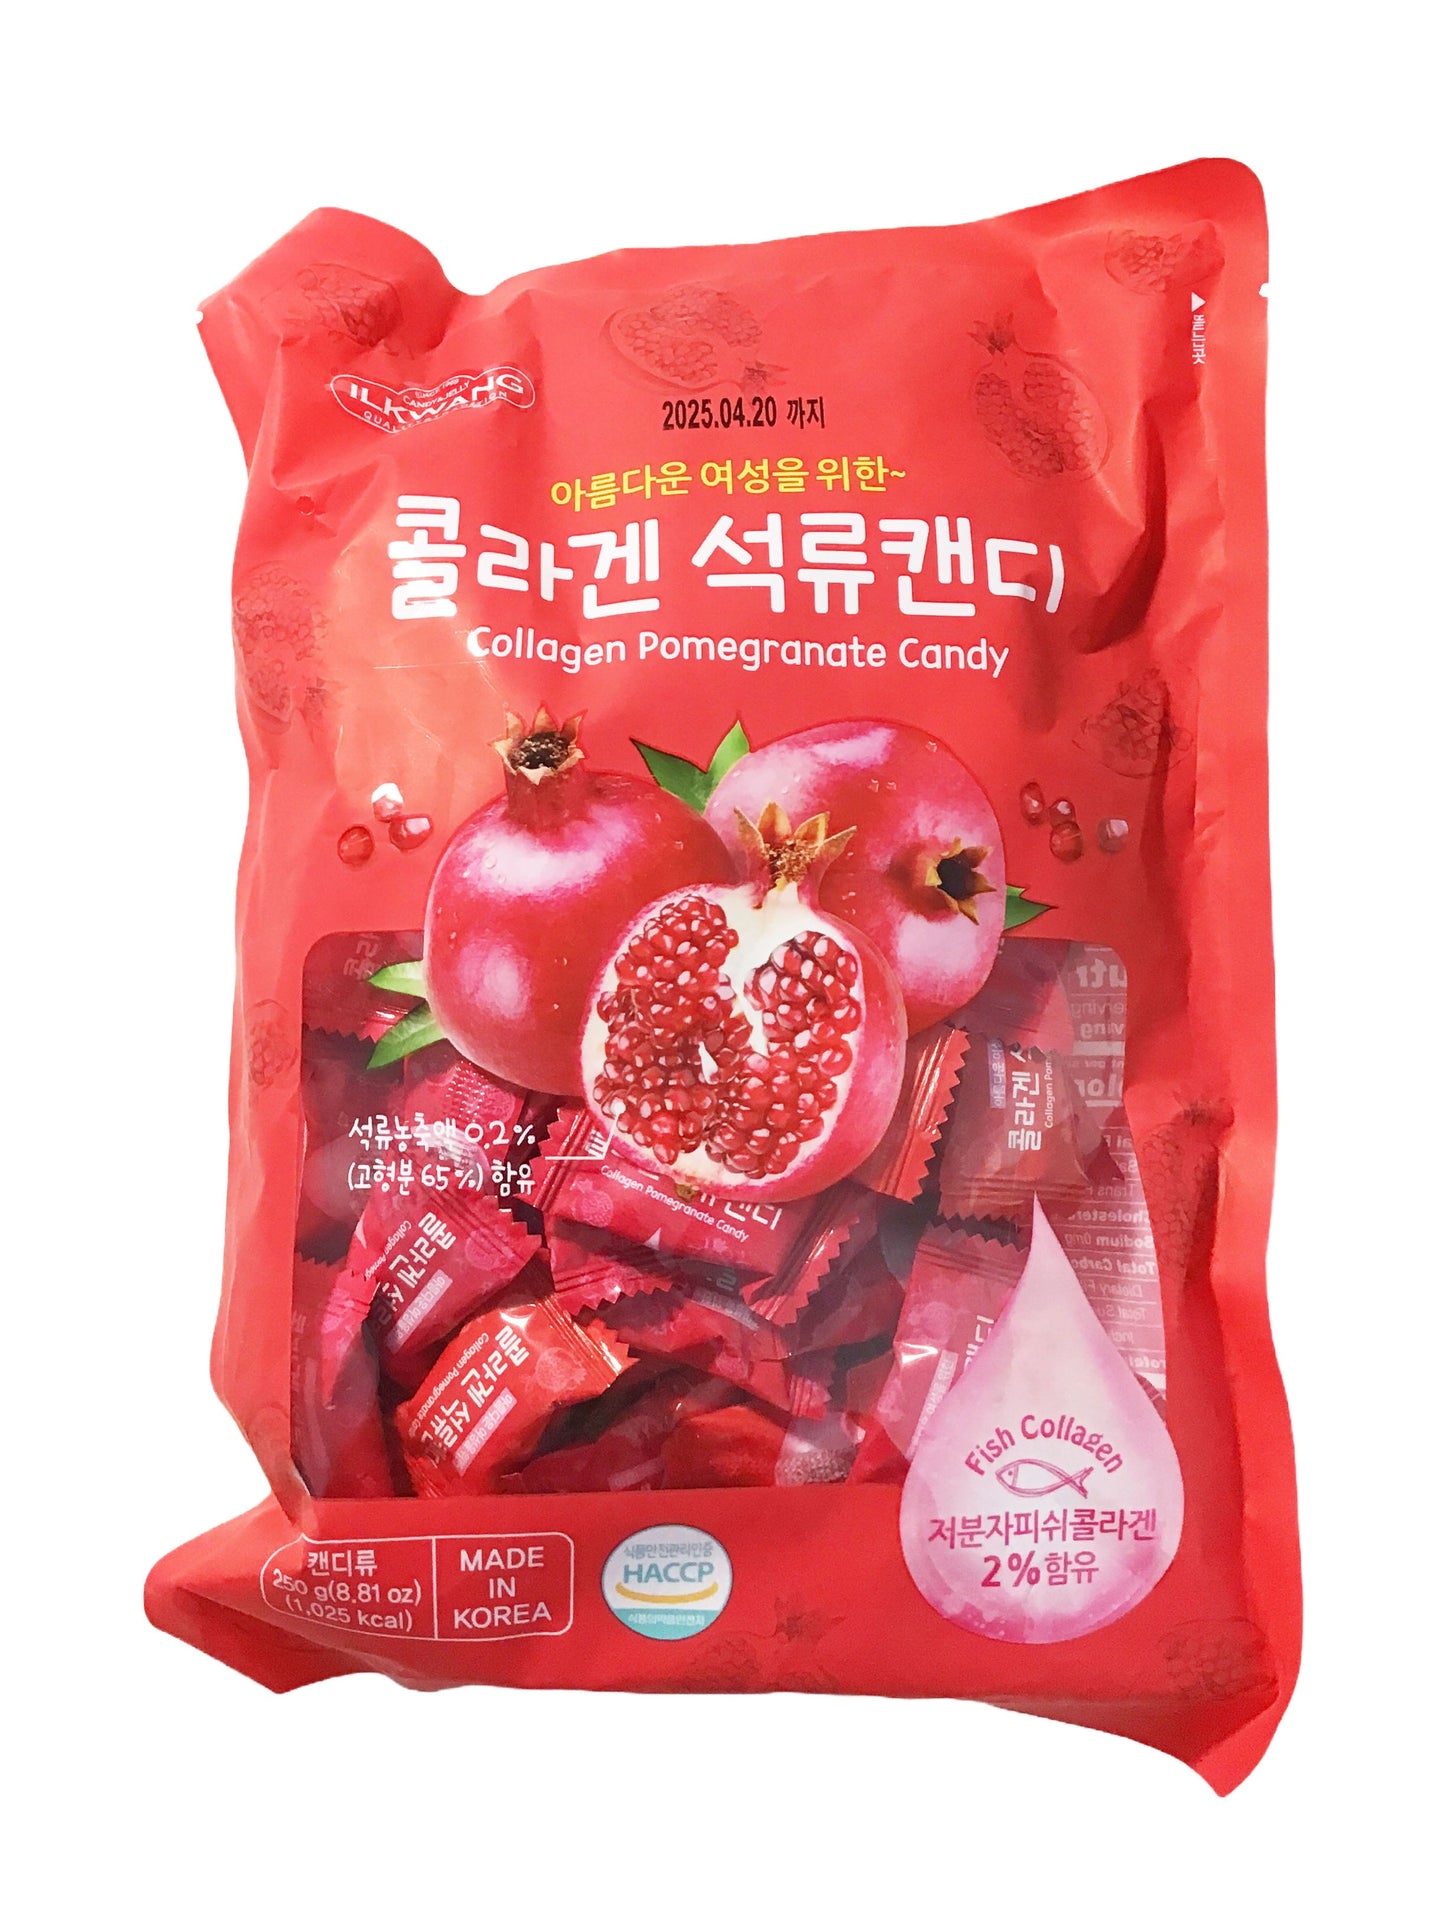 ILKWANG Collagen Pomegranate Candy 胶原石榴糖 8.81oz (250g)